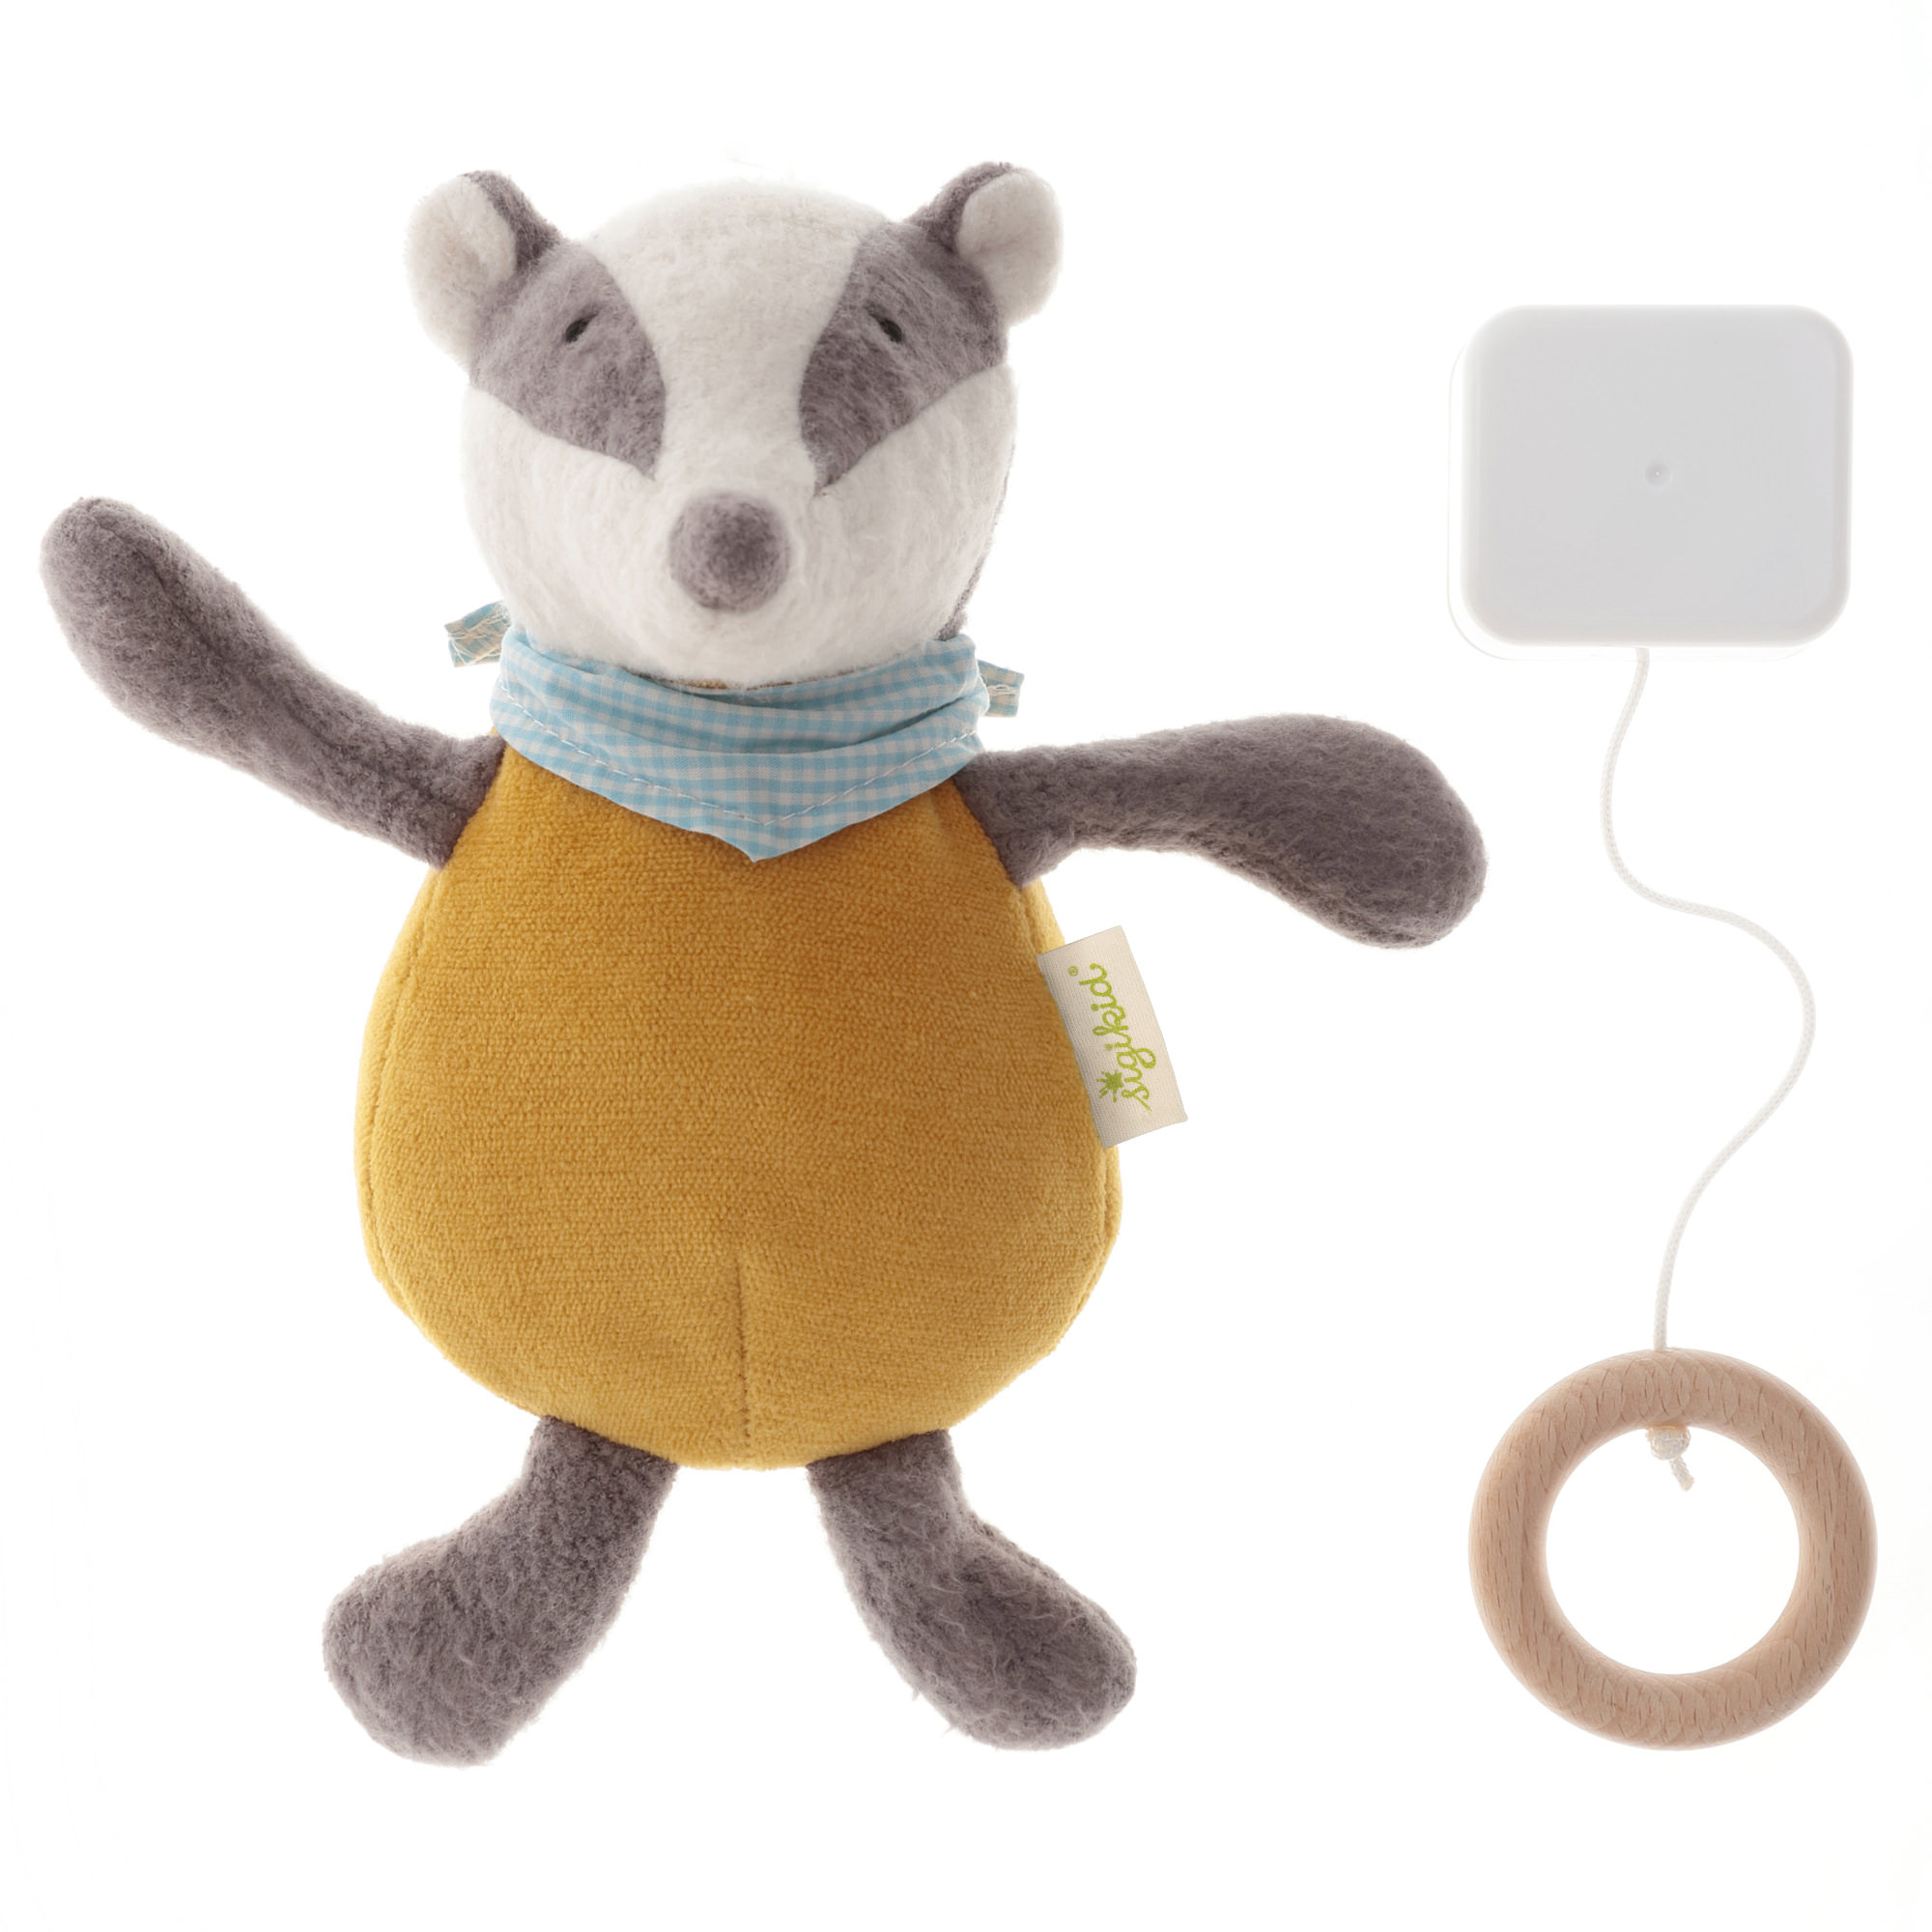 Organic musical soft toy badger